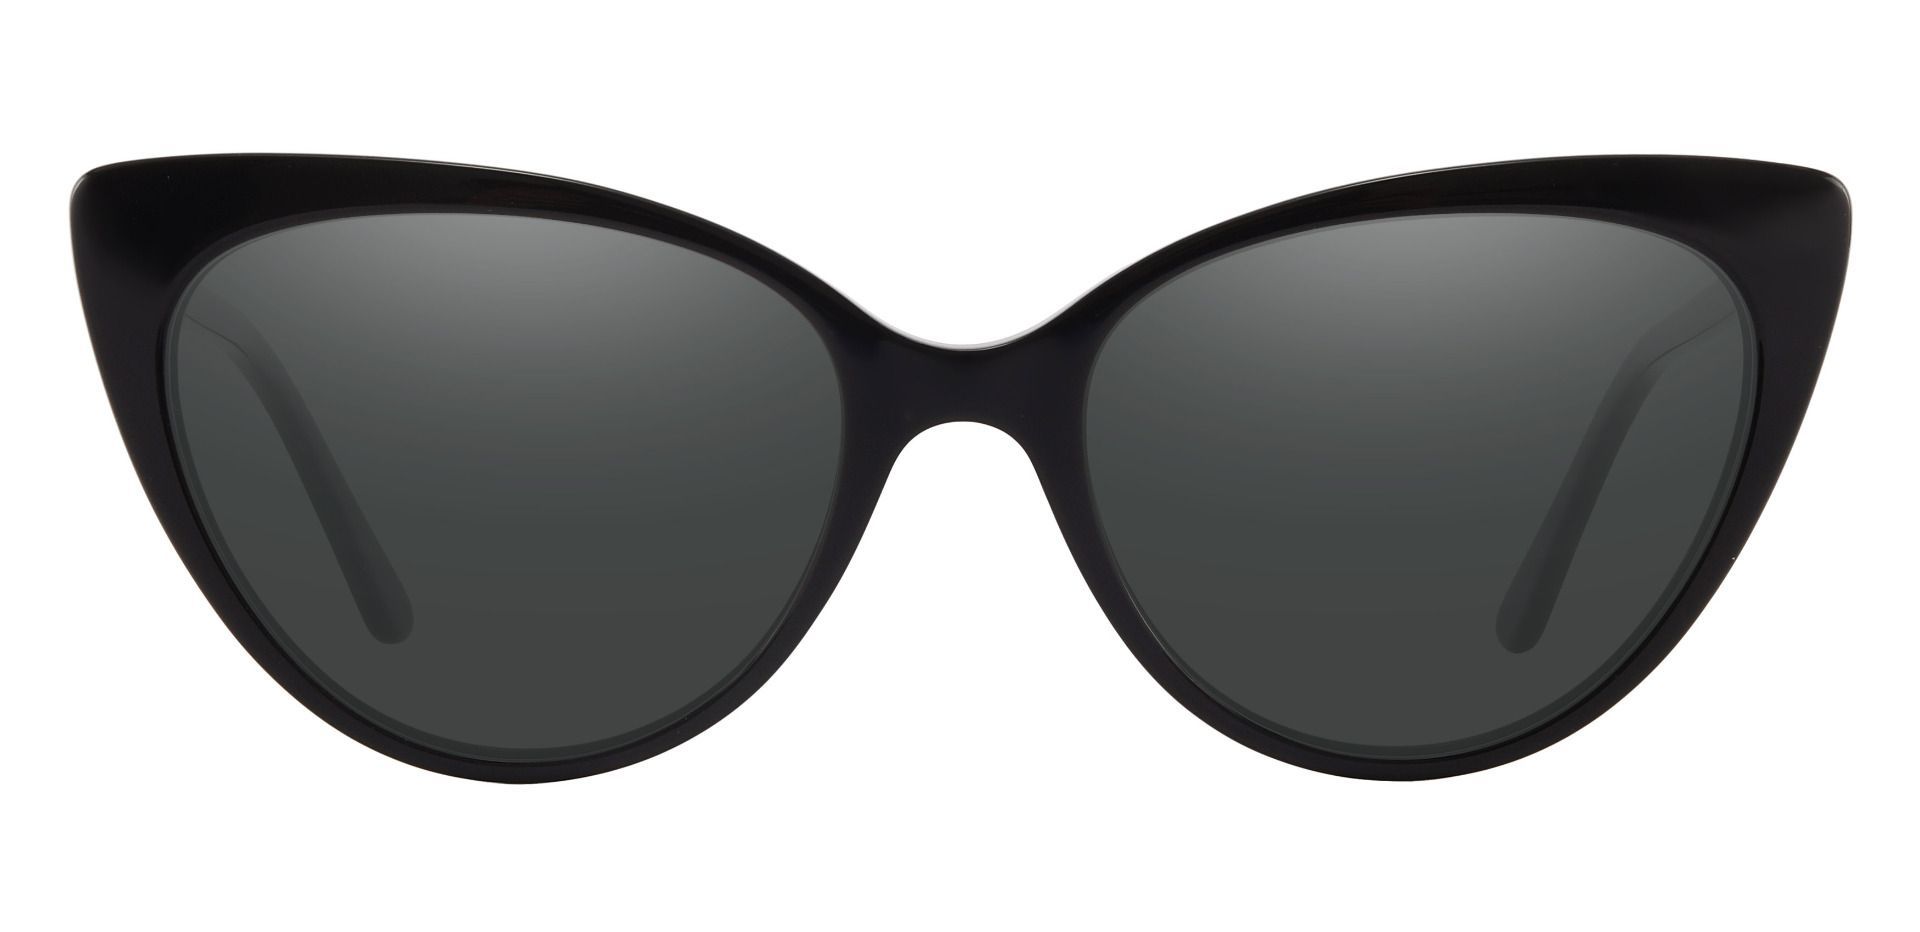 Bristol Cat Eye Lined Bifocal Sunglasses - Green Frame With Gray Lenses ...